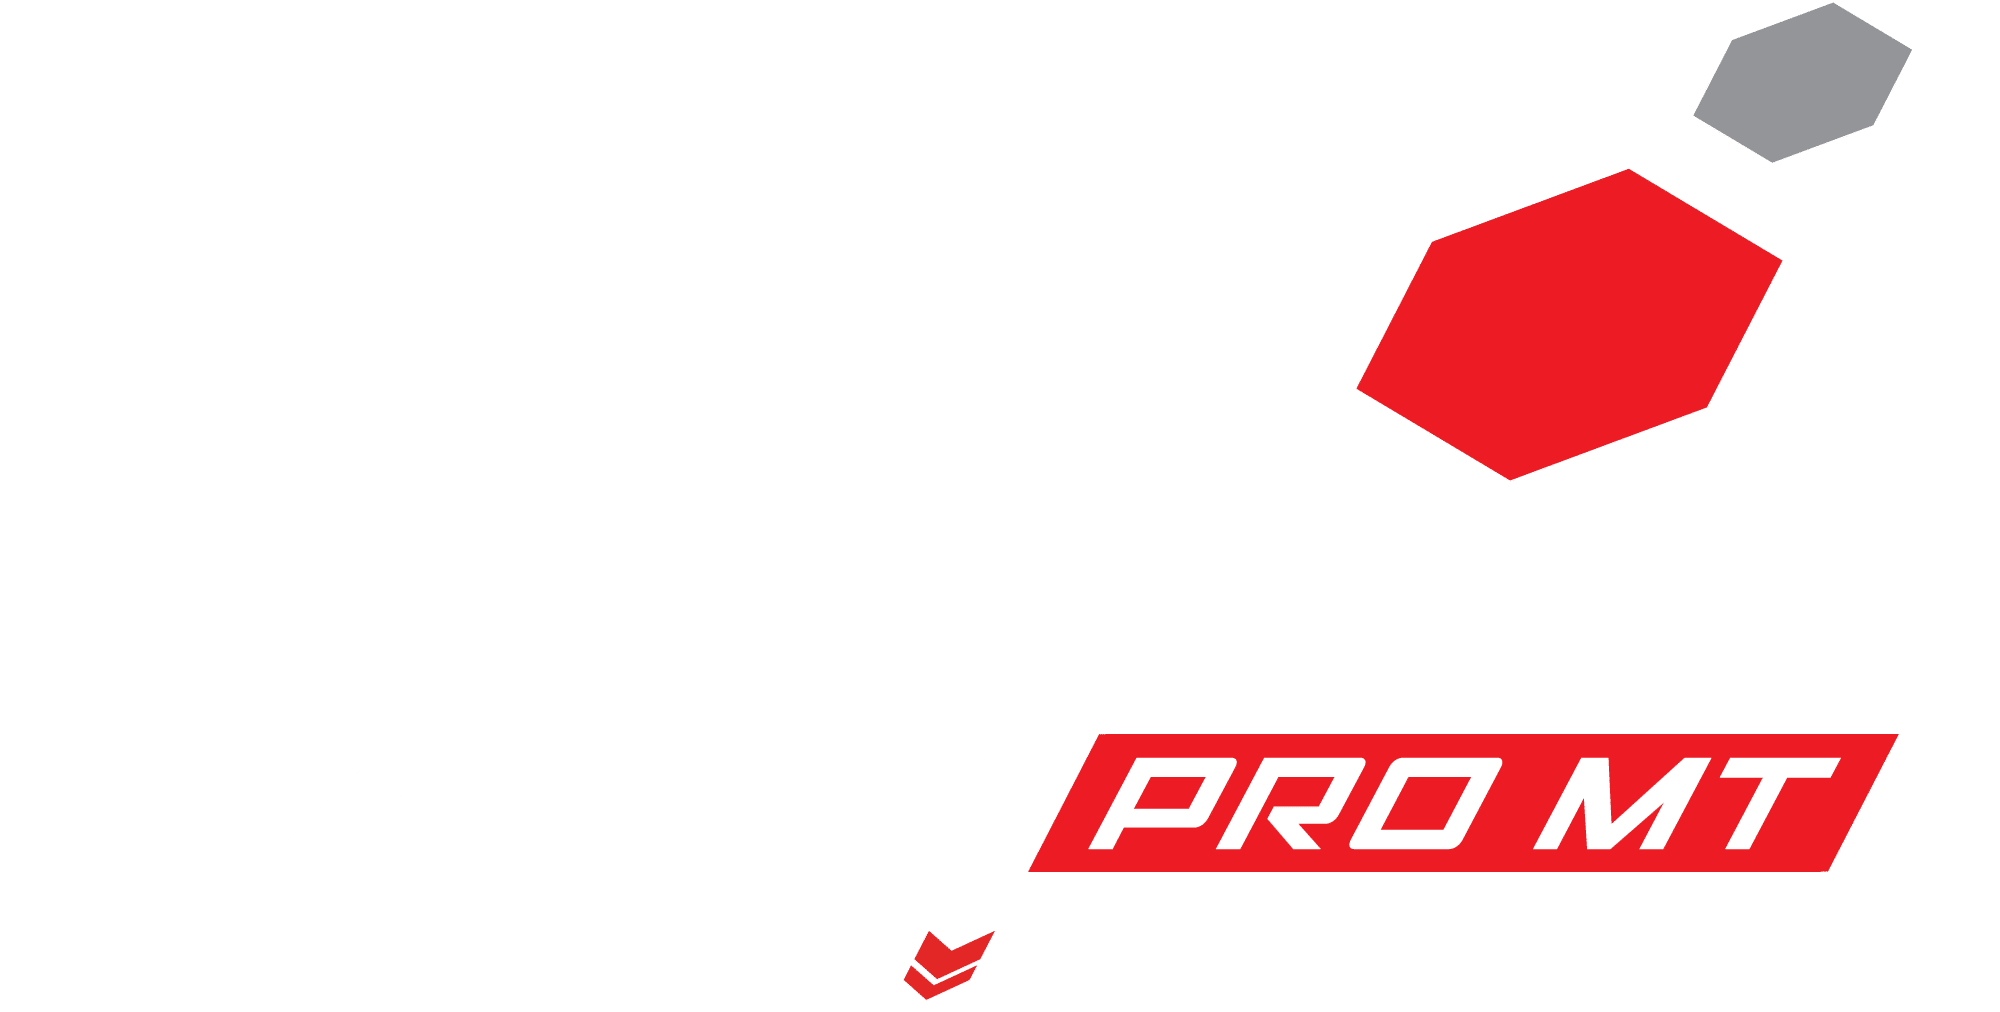 Nano Pro MT - Military Tested. Military Tough.